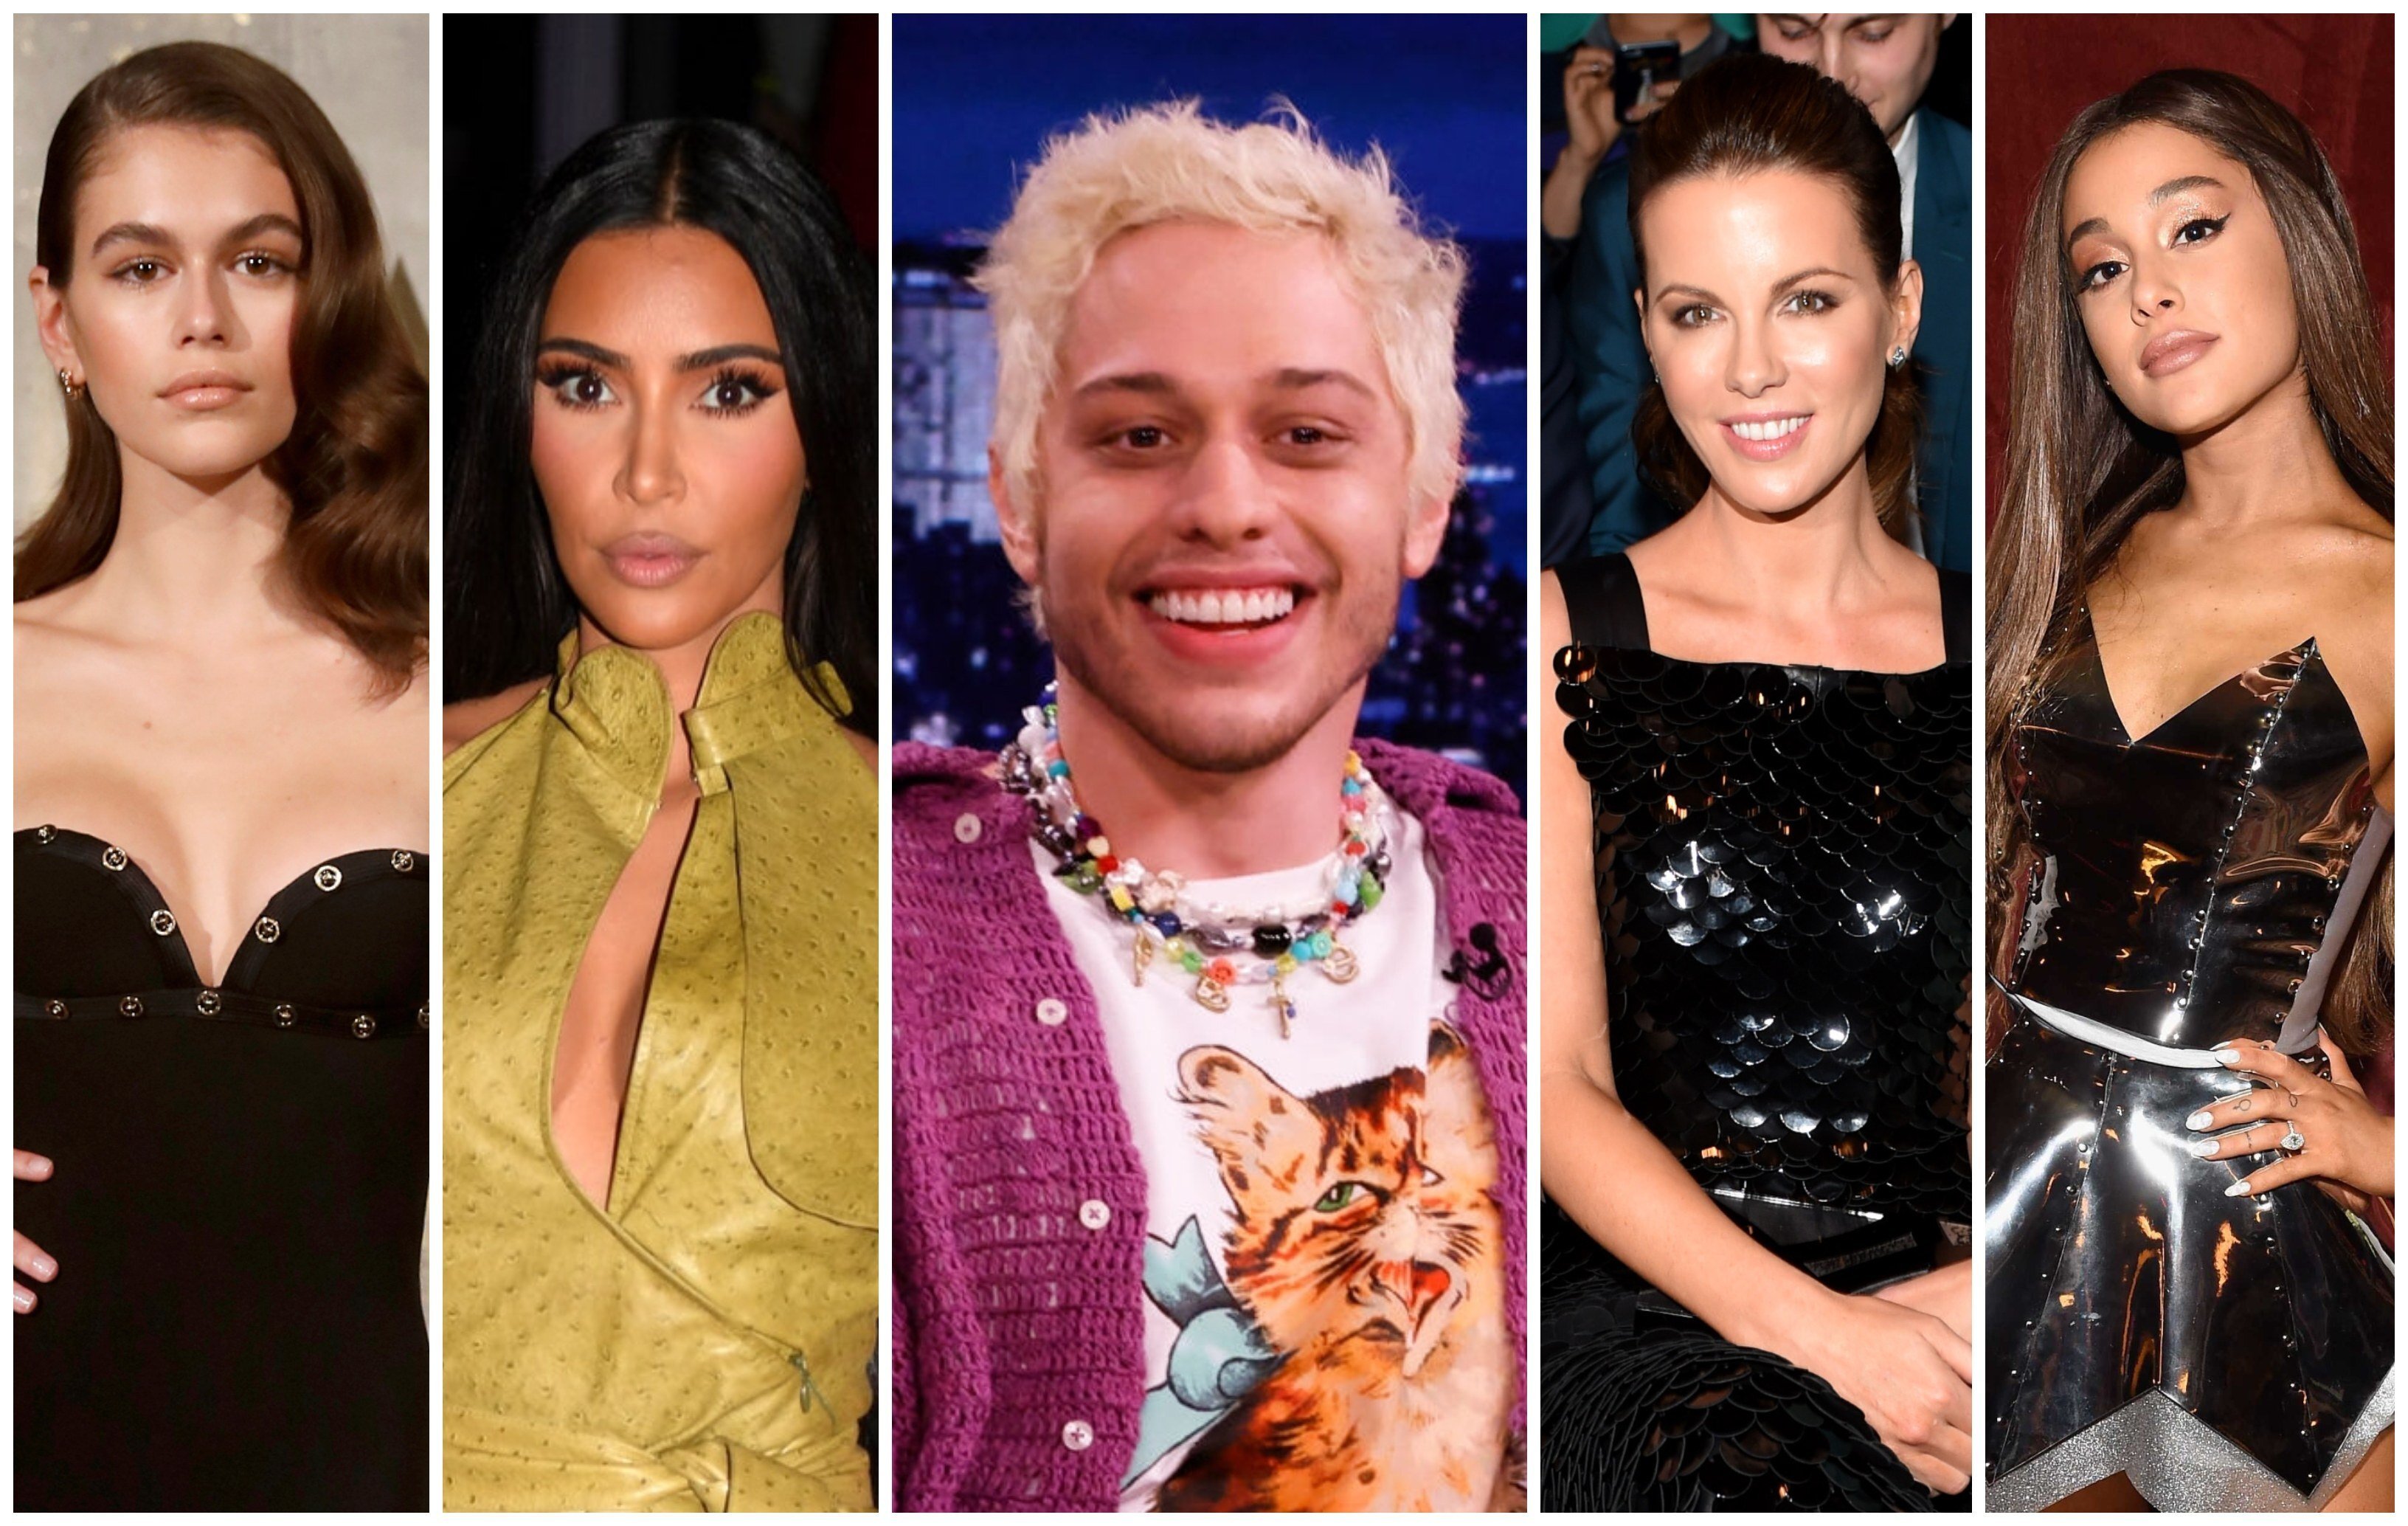 6 stunning stars SNL comedian Pete Davidson has dated, including Kaia Gerber, Kate Beckinsale, Ariana Grande and … Kim Kardashian? Photos: Getty